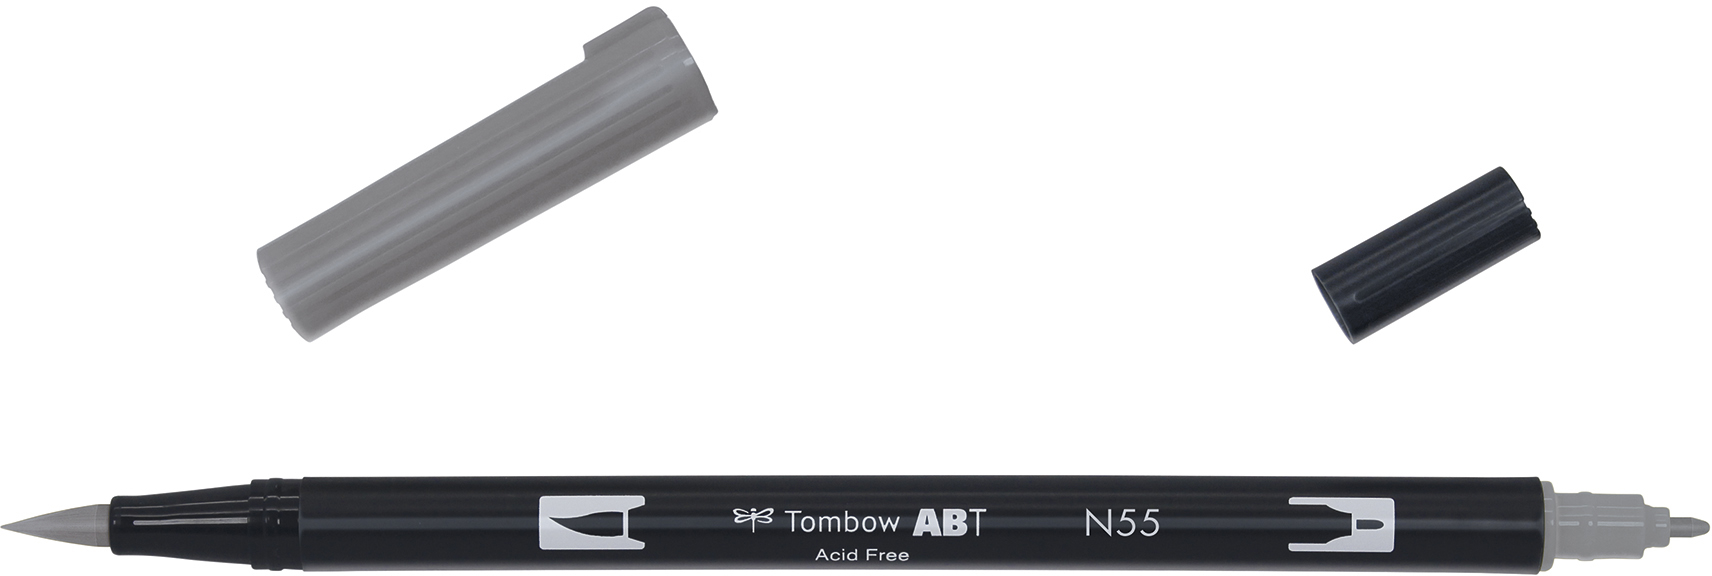 TOMBOW Dual Brush Pen ABT N55 cool gray 7 cool gray 7